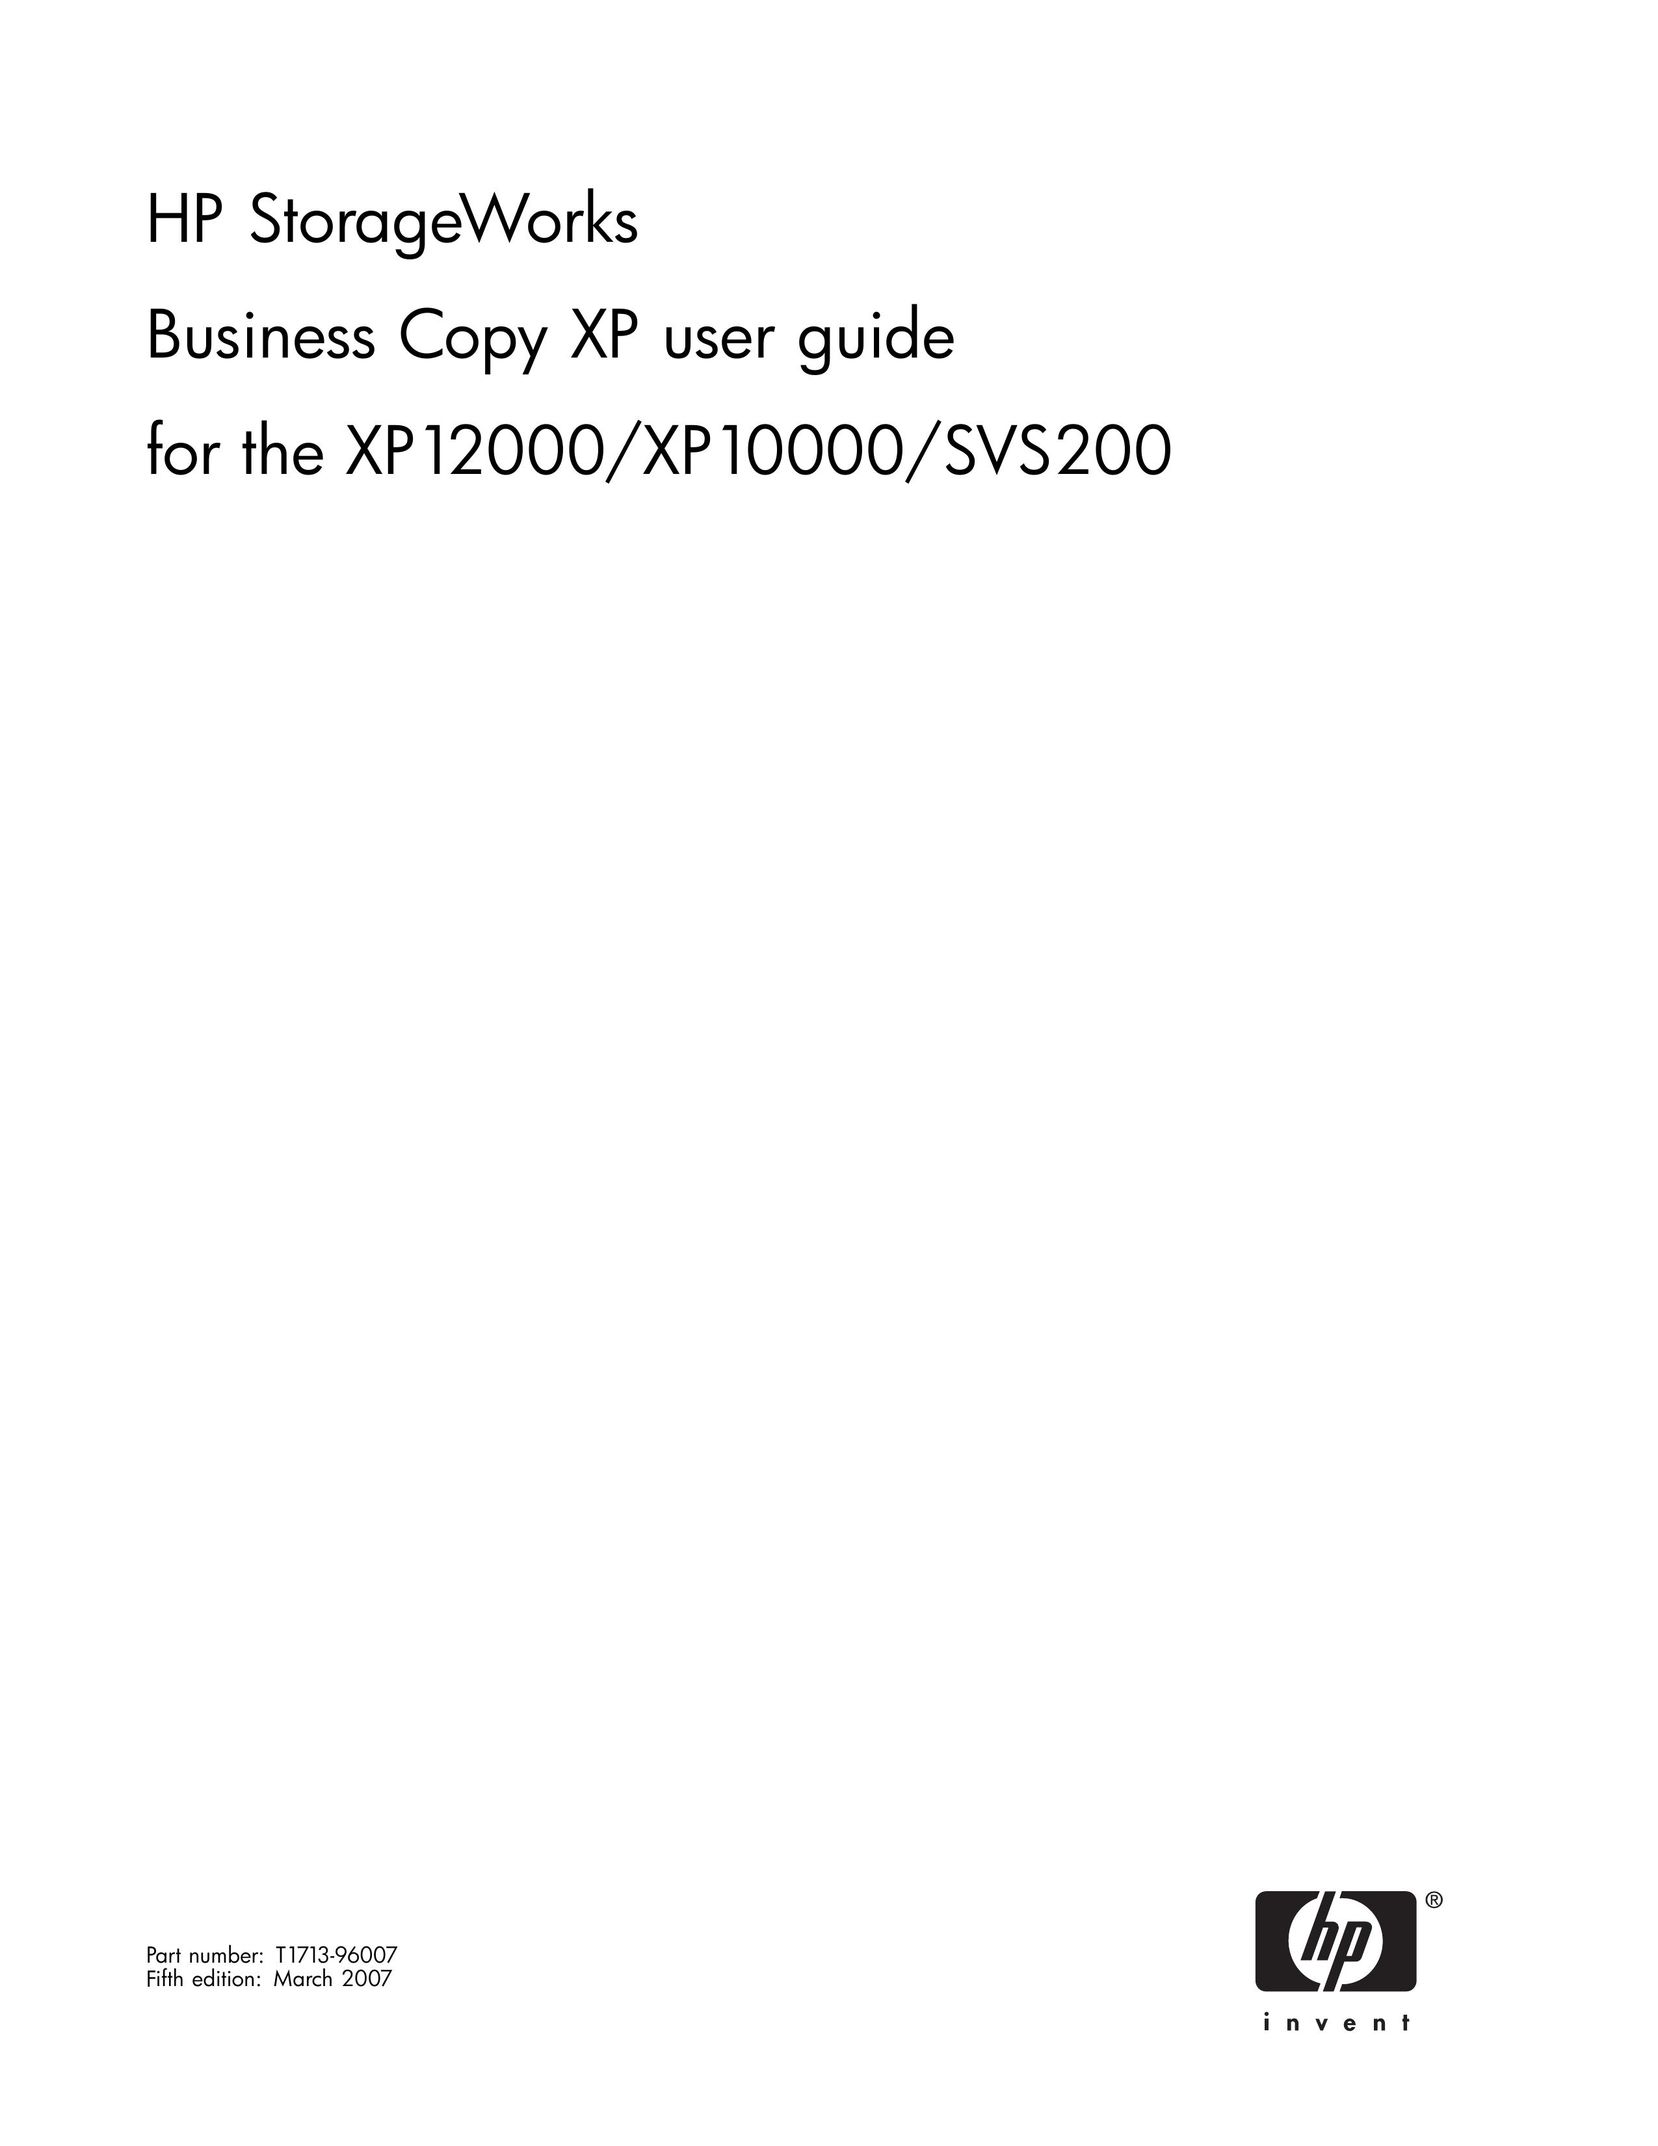 HP (Hewlett-Packard) XP10000 Tool Storage User Manual